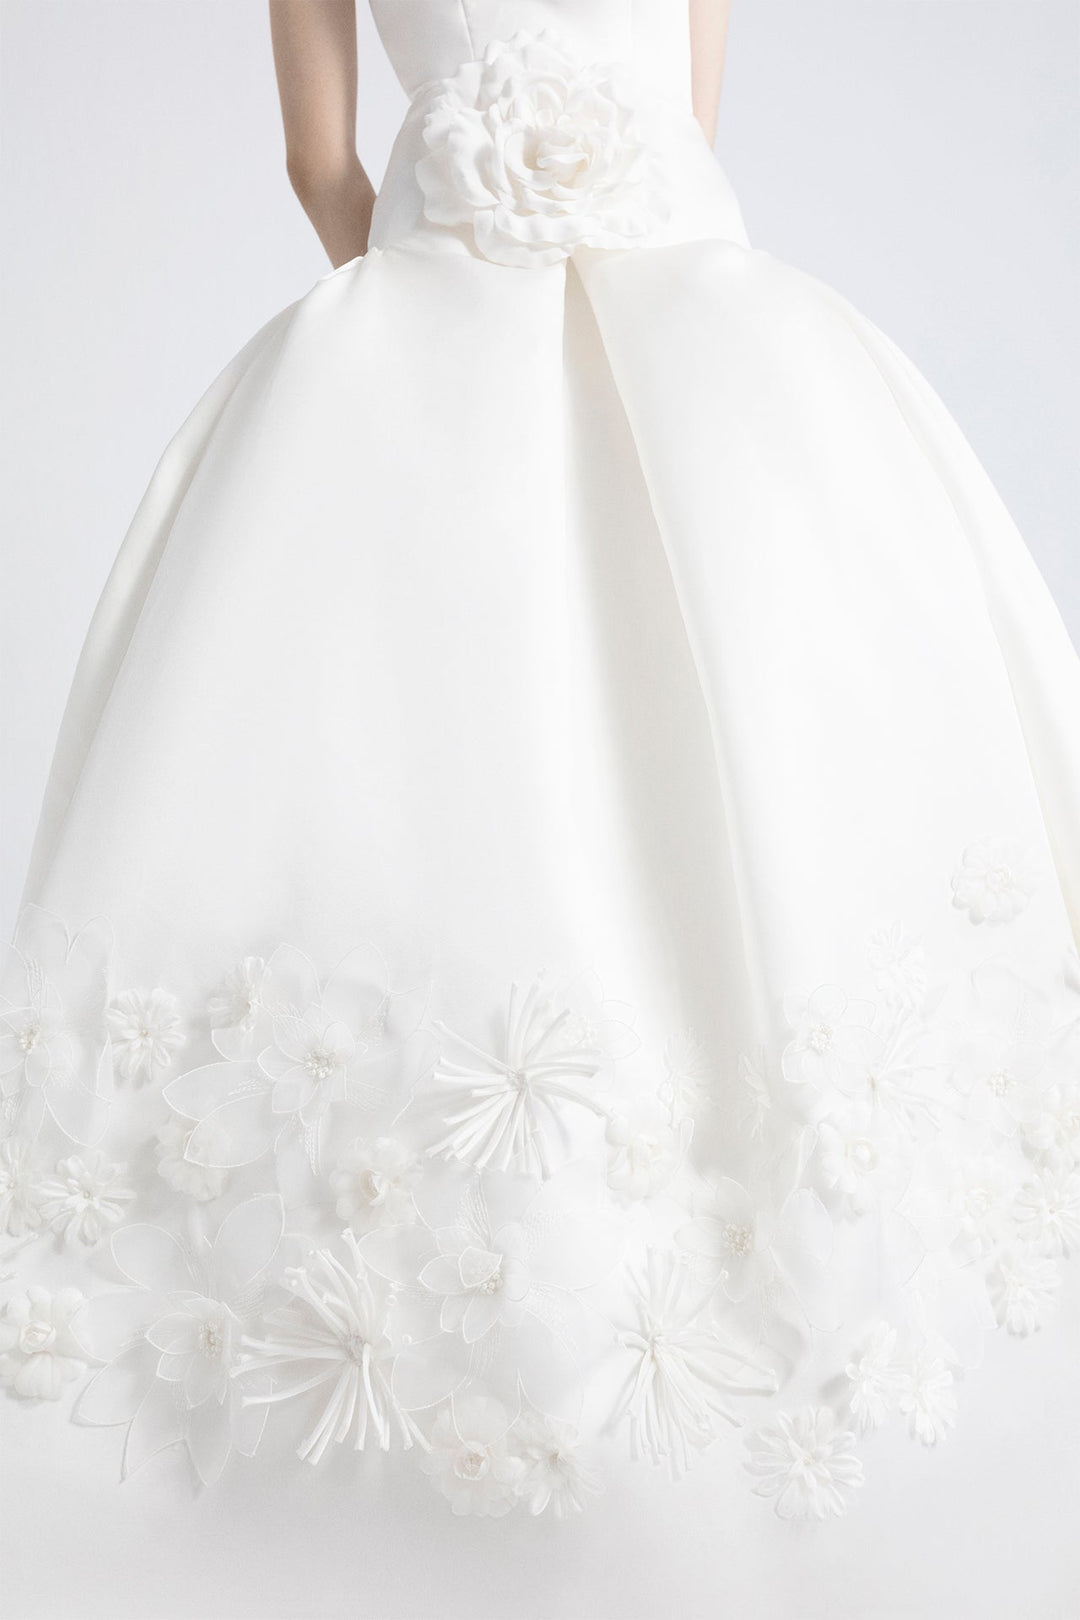 Strapless Princess Wedding Dress with Flowers